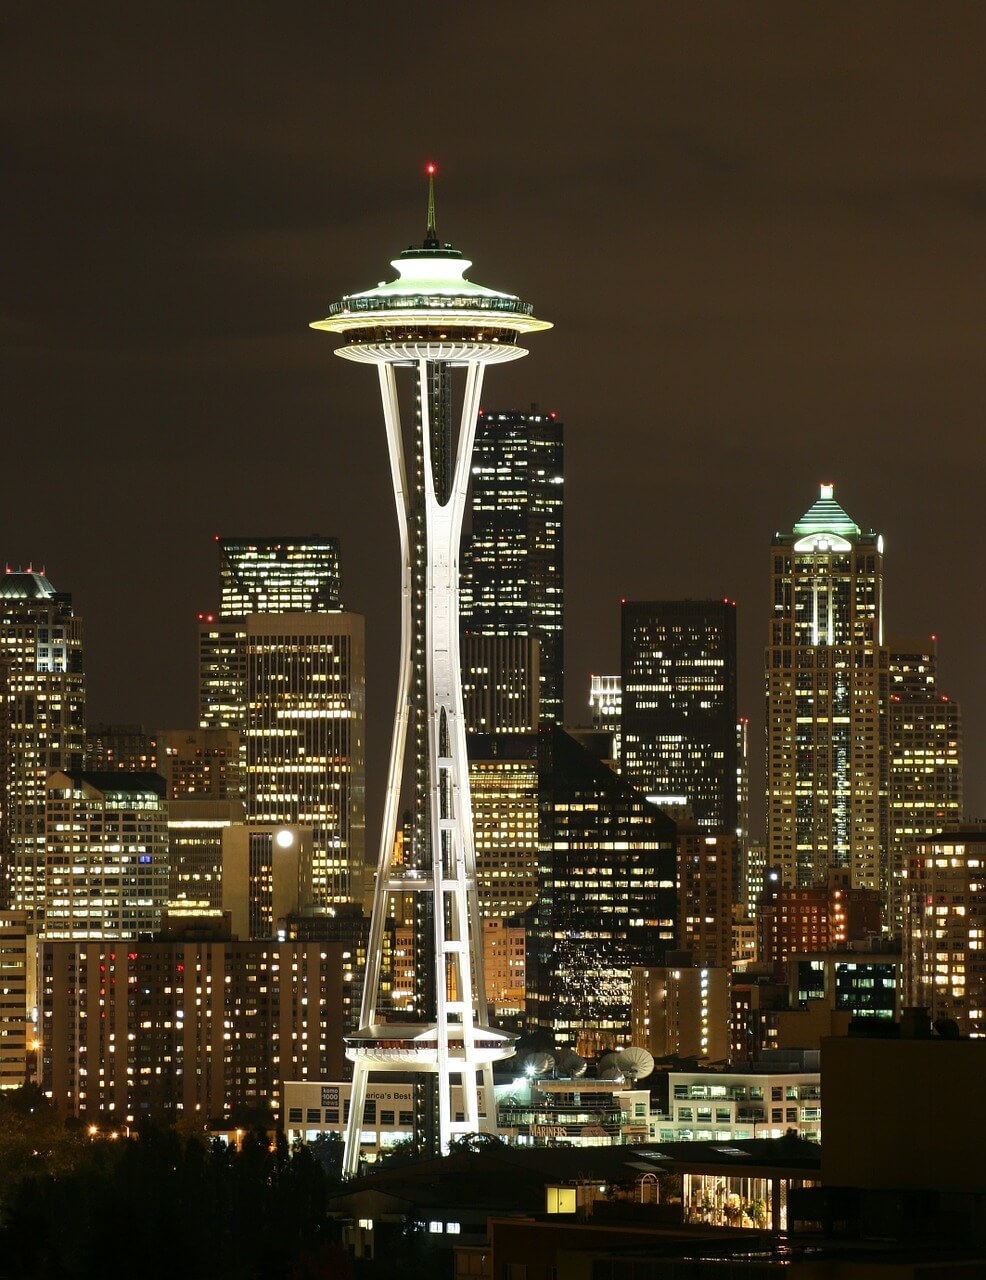 Photograph of Seattle, Washington.